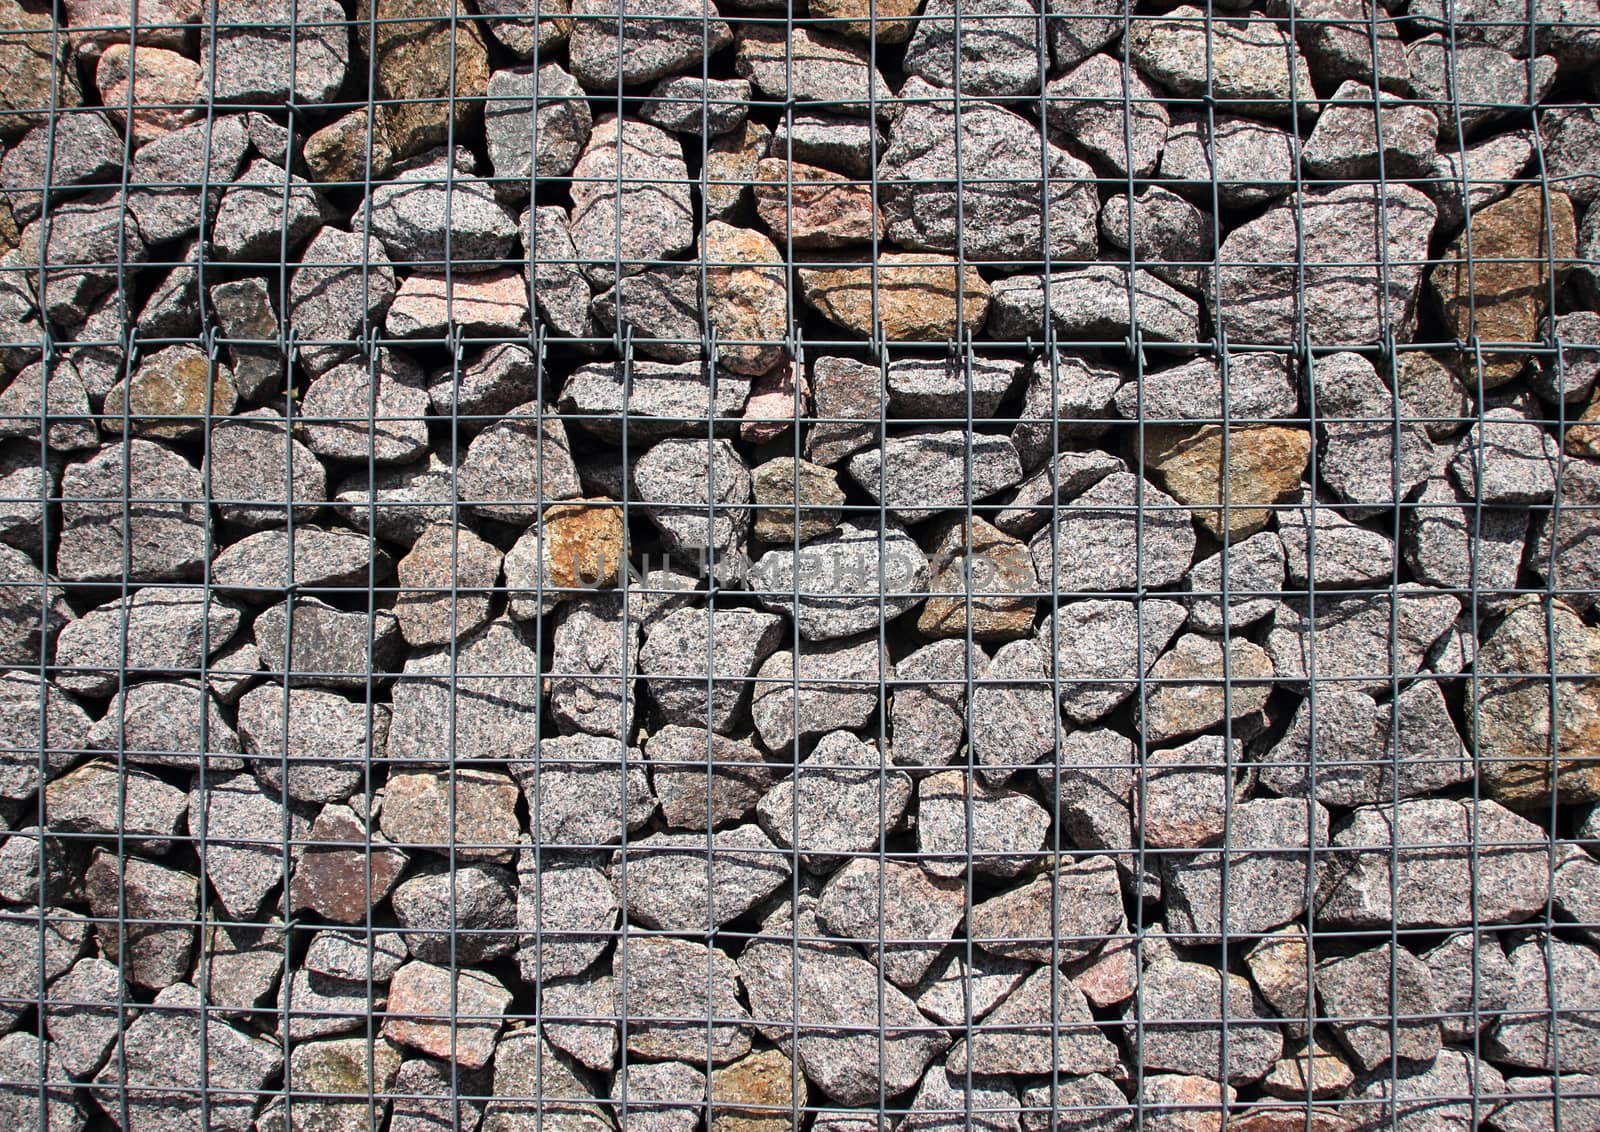 Rocks in solid metal grid construction